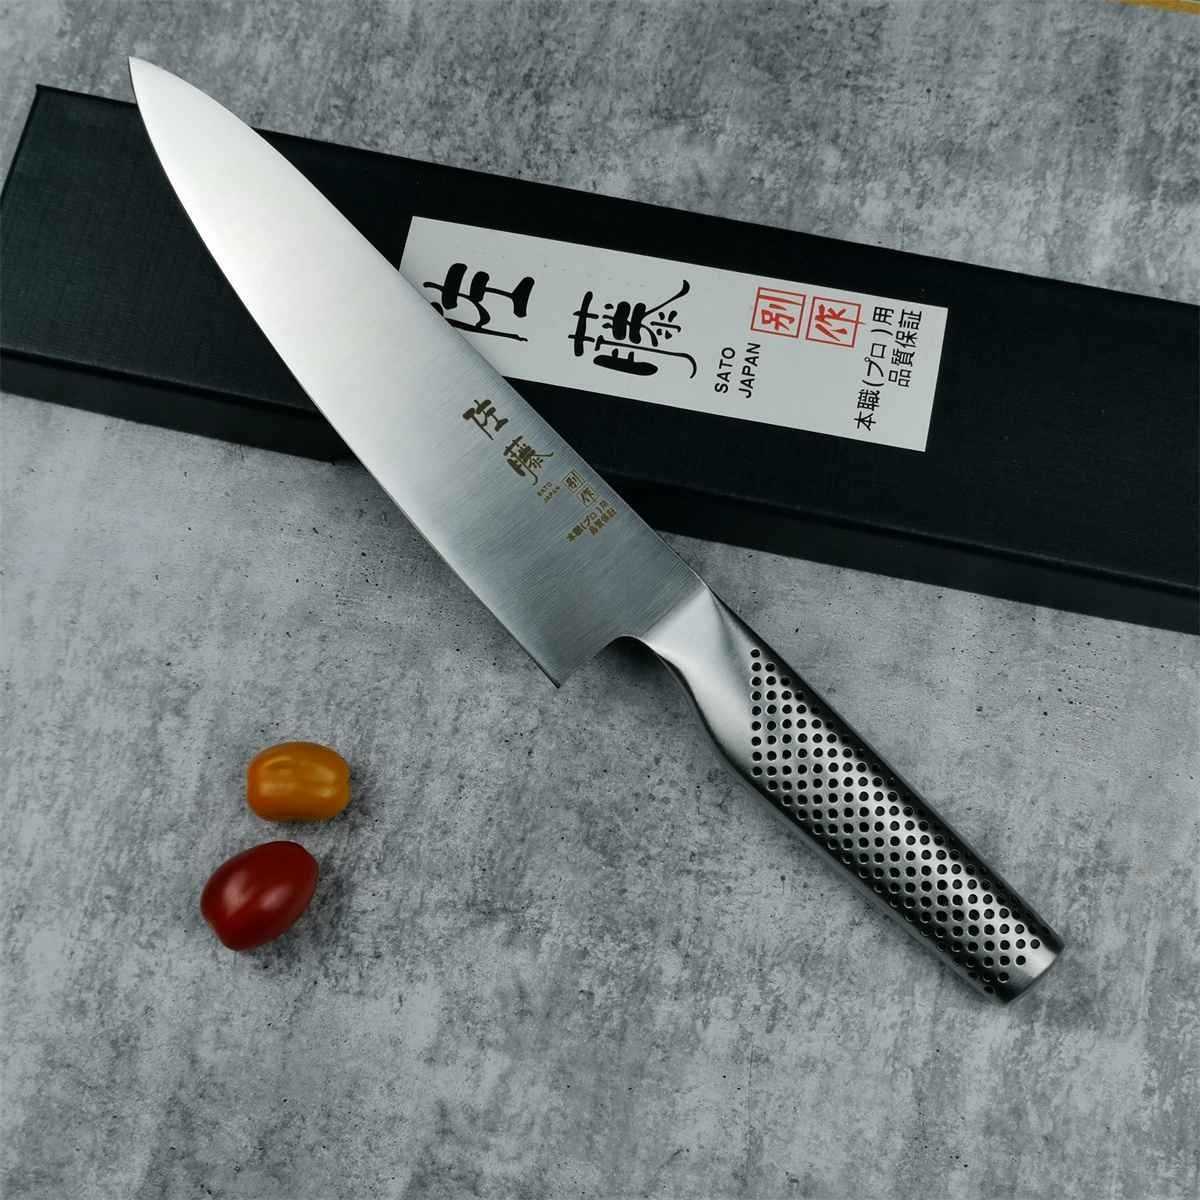 EVERRICH 7 Inch Santoku Chef Knife Kitchen Knives Japanese